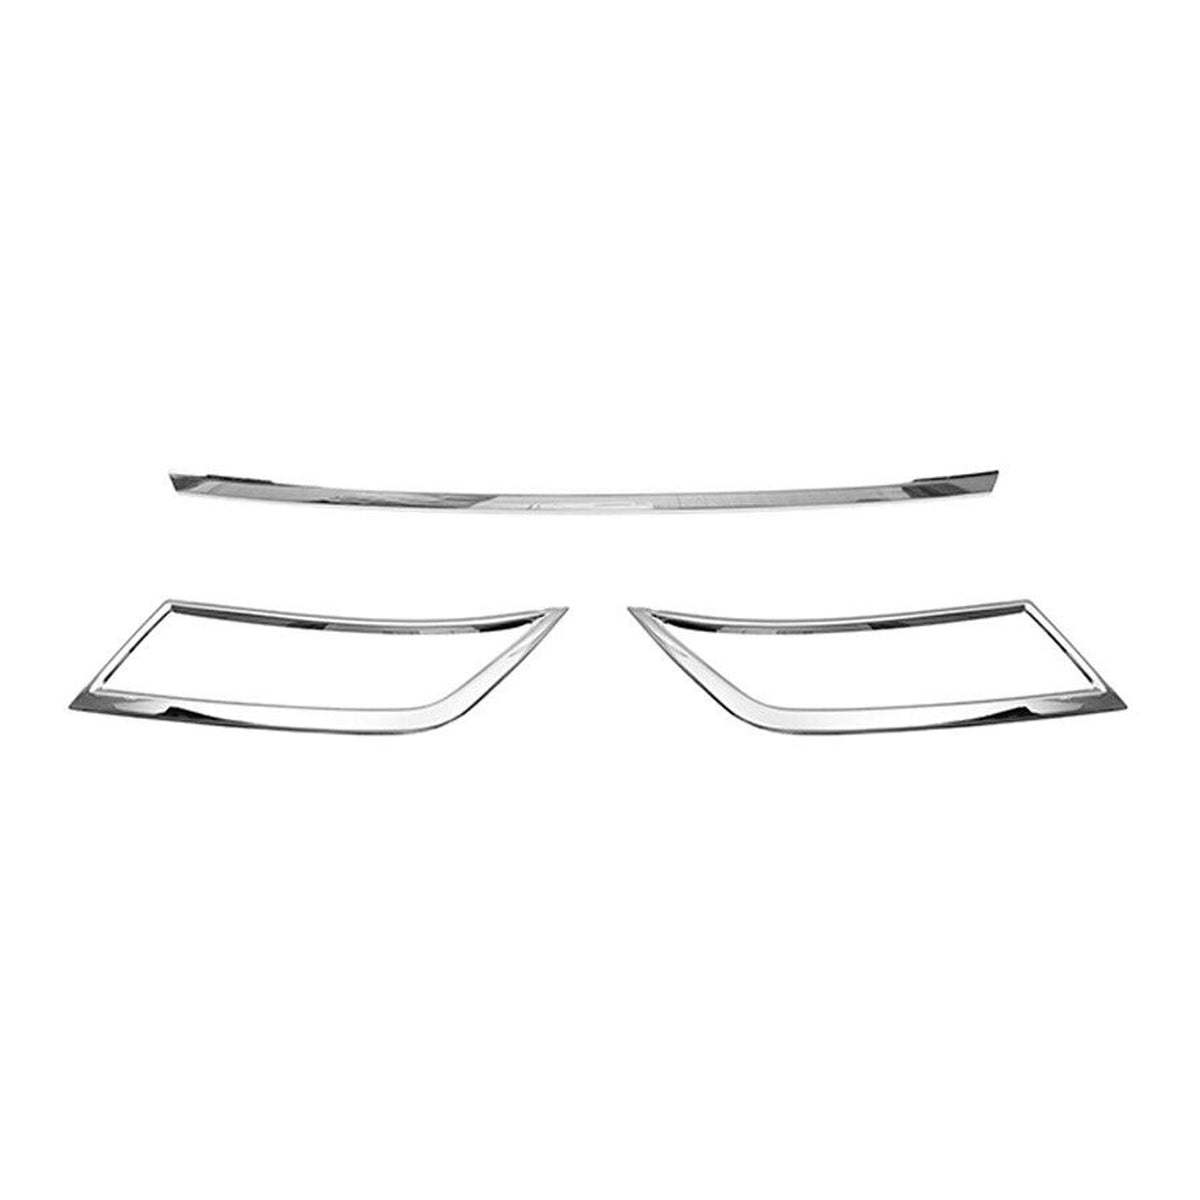 Trunk strip rear strip for Skoda Octavia 2012-2019 stainless steel chrome 3 pieces